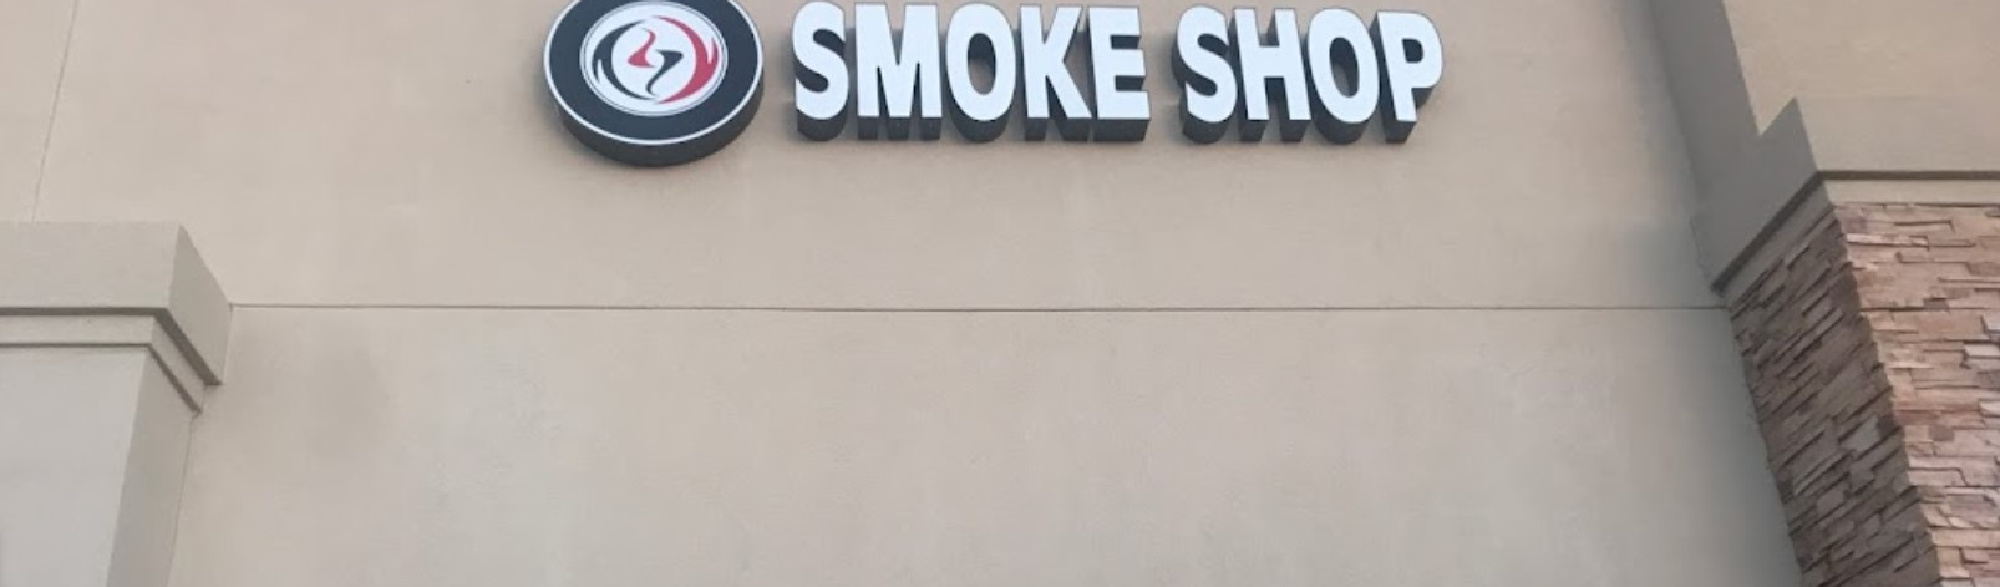 image of gravitate smoke shop in glendale az